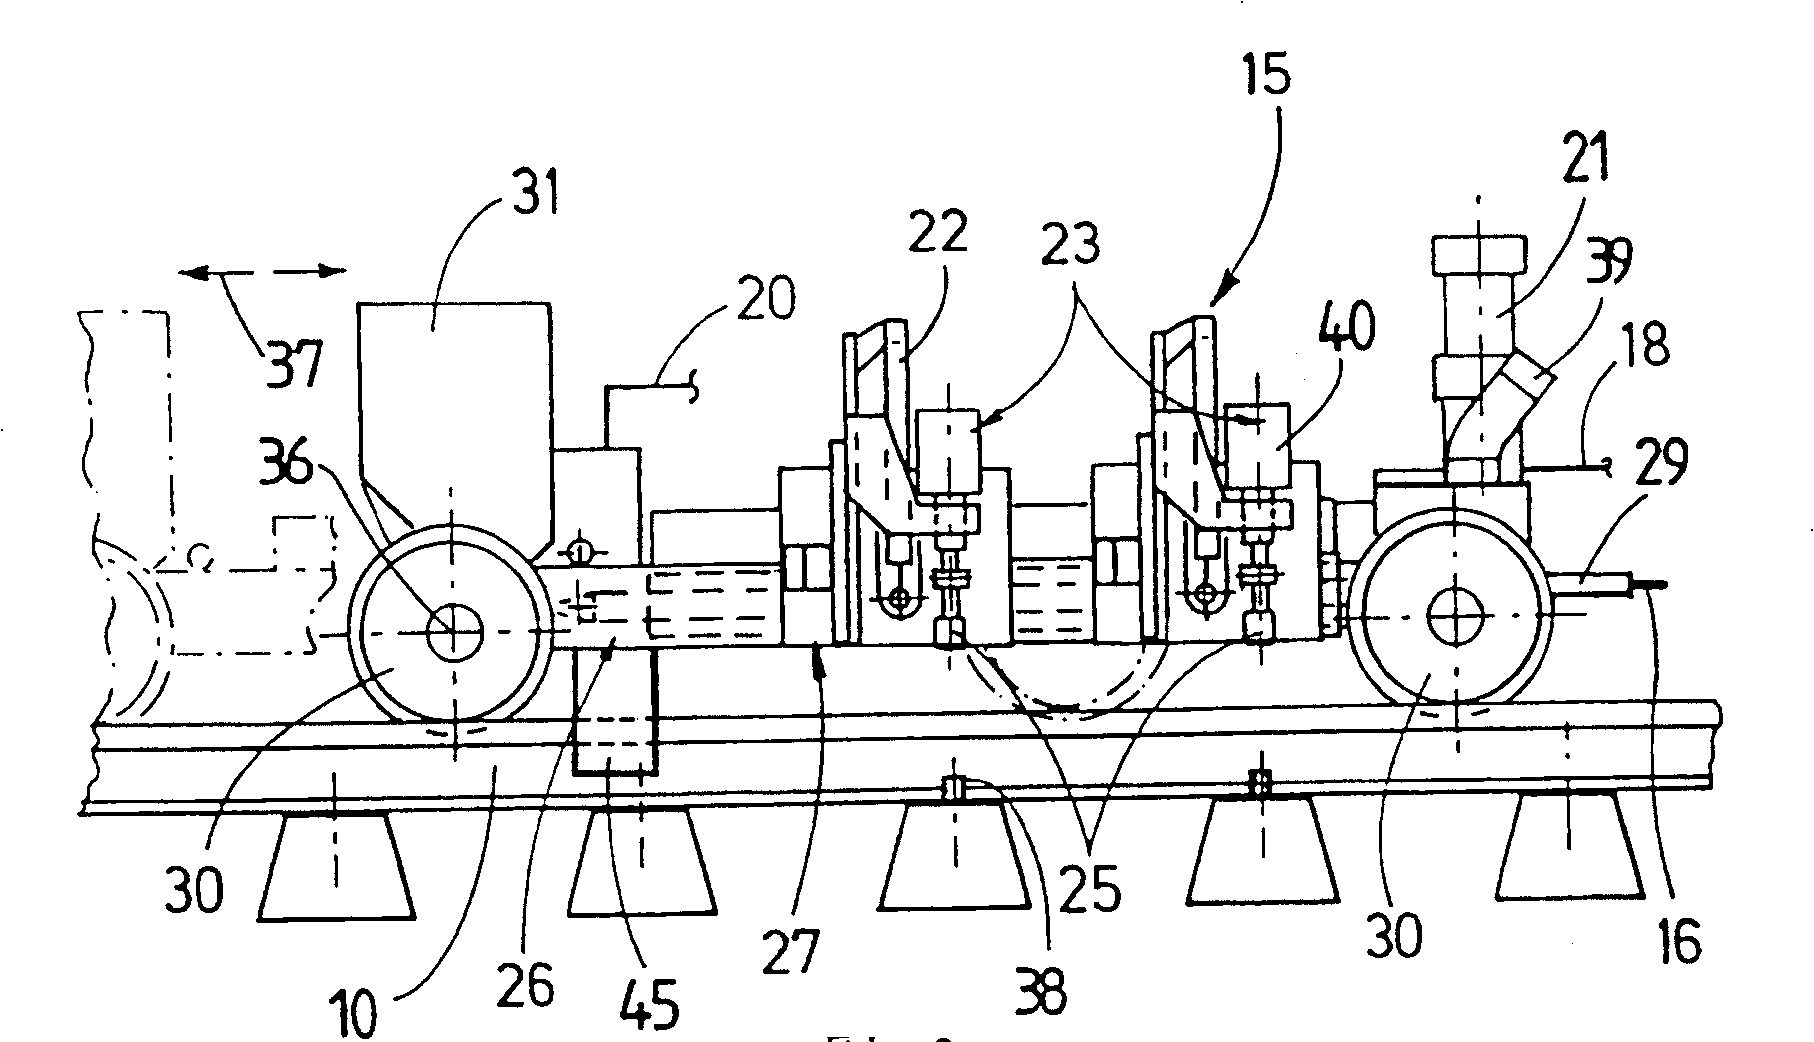 Machine and method for machining rails